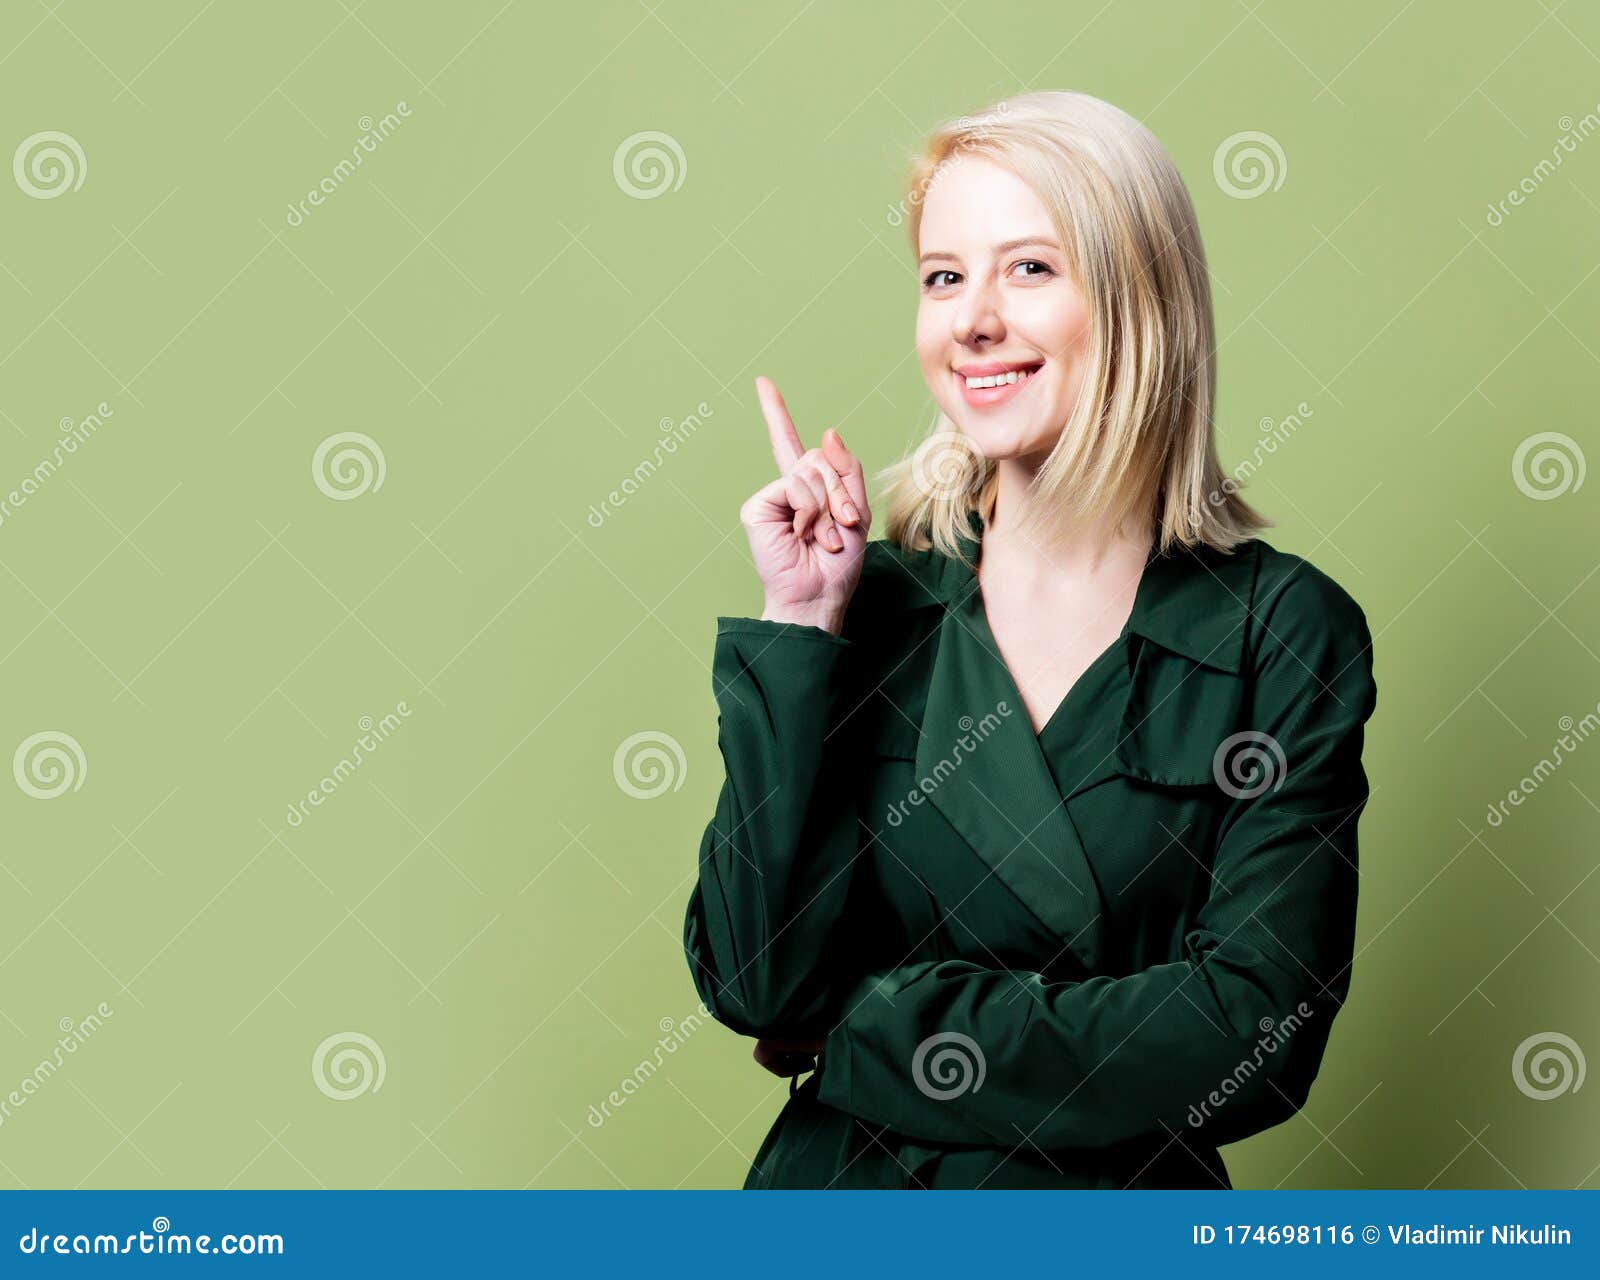 Style Blonde Woman in Green Gloak Stock Photo - Image of purple ...